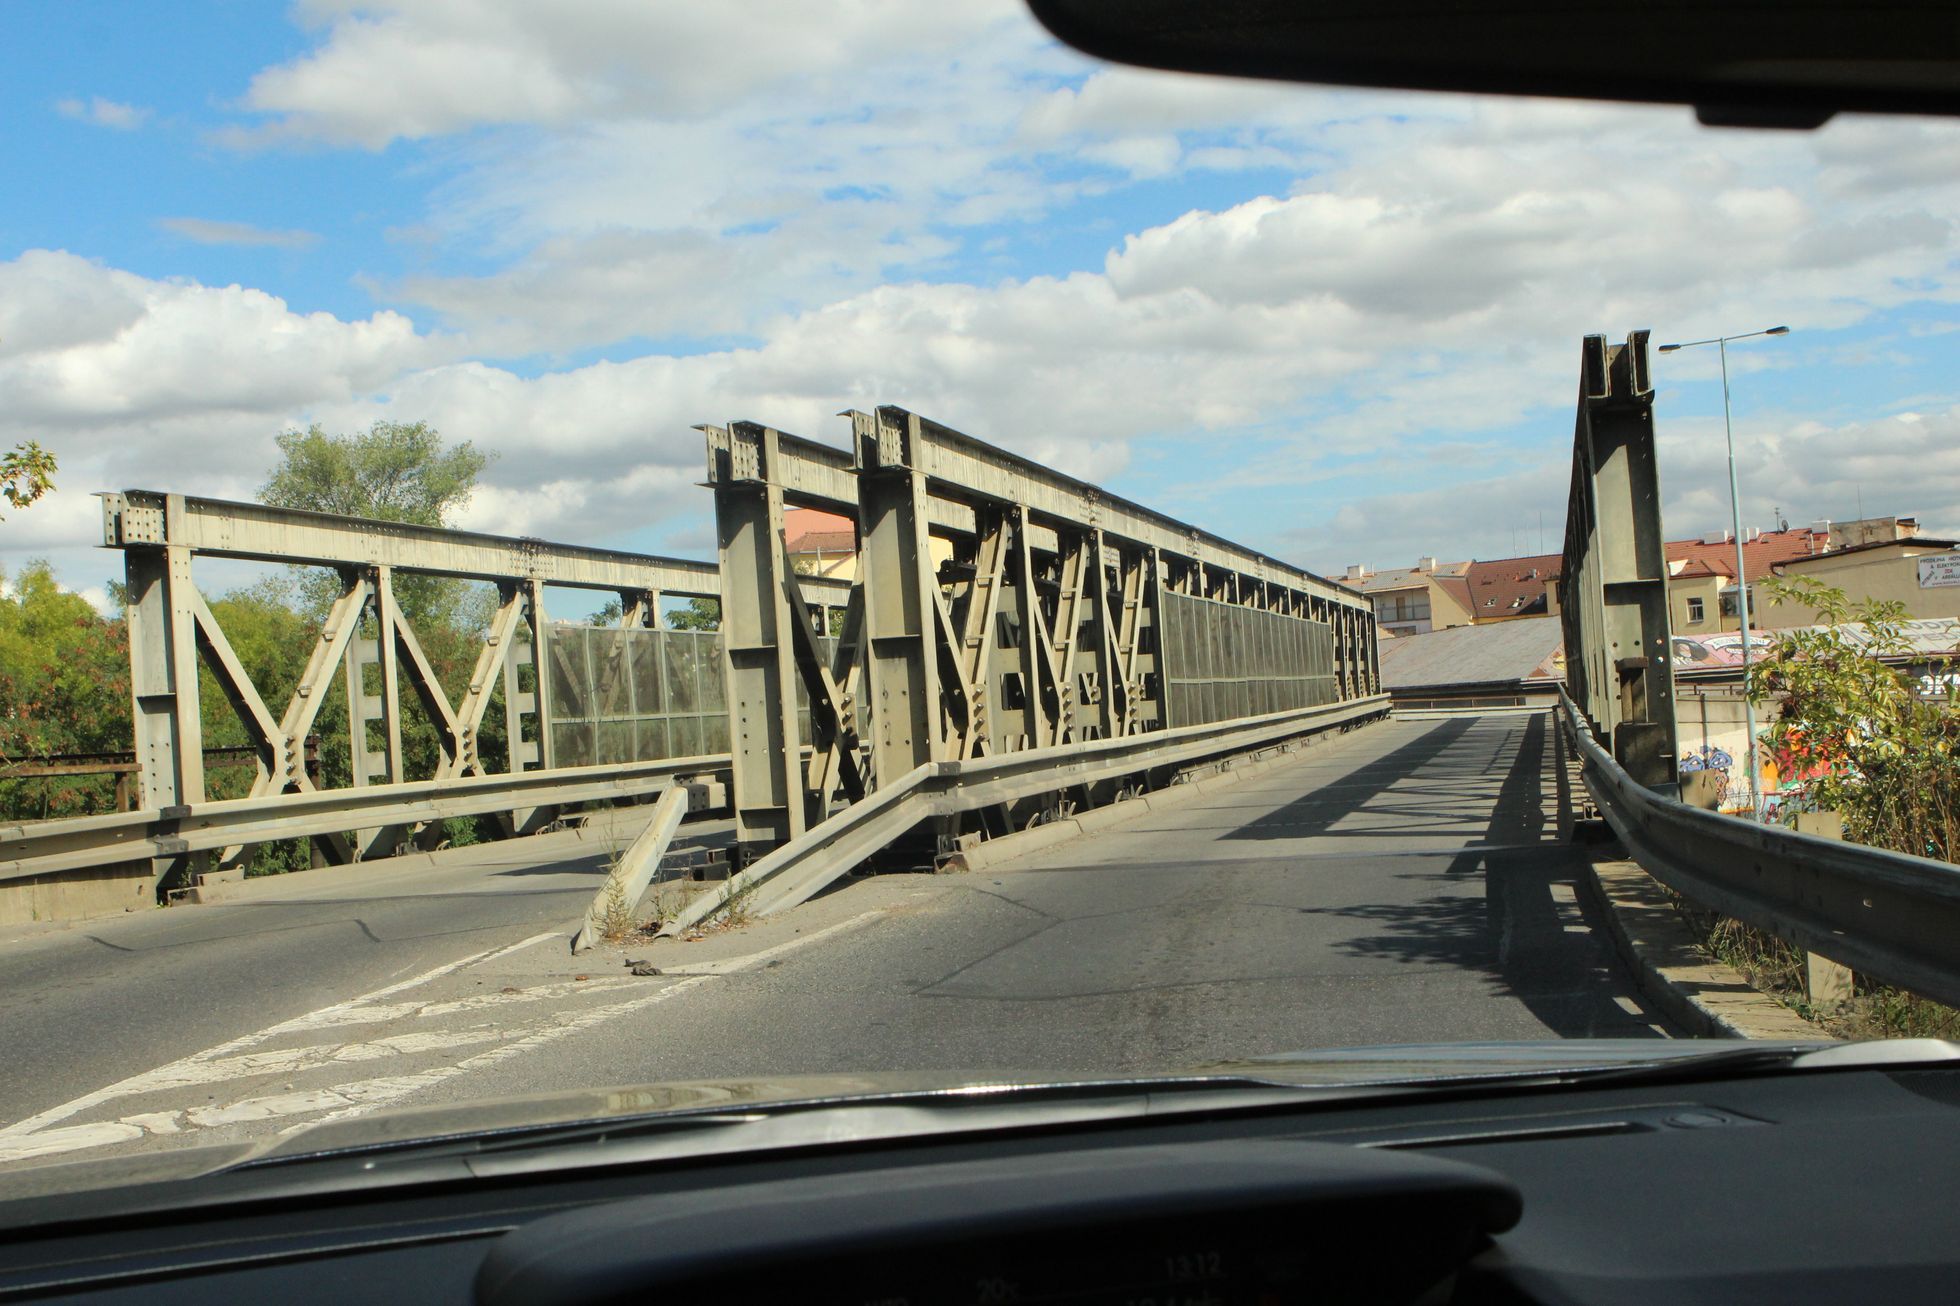 Doprava v Praze - železniční most trasa Karlovy Vary - Ústí nad Labem